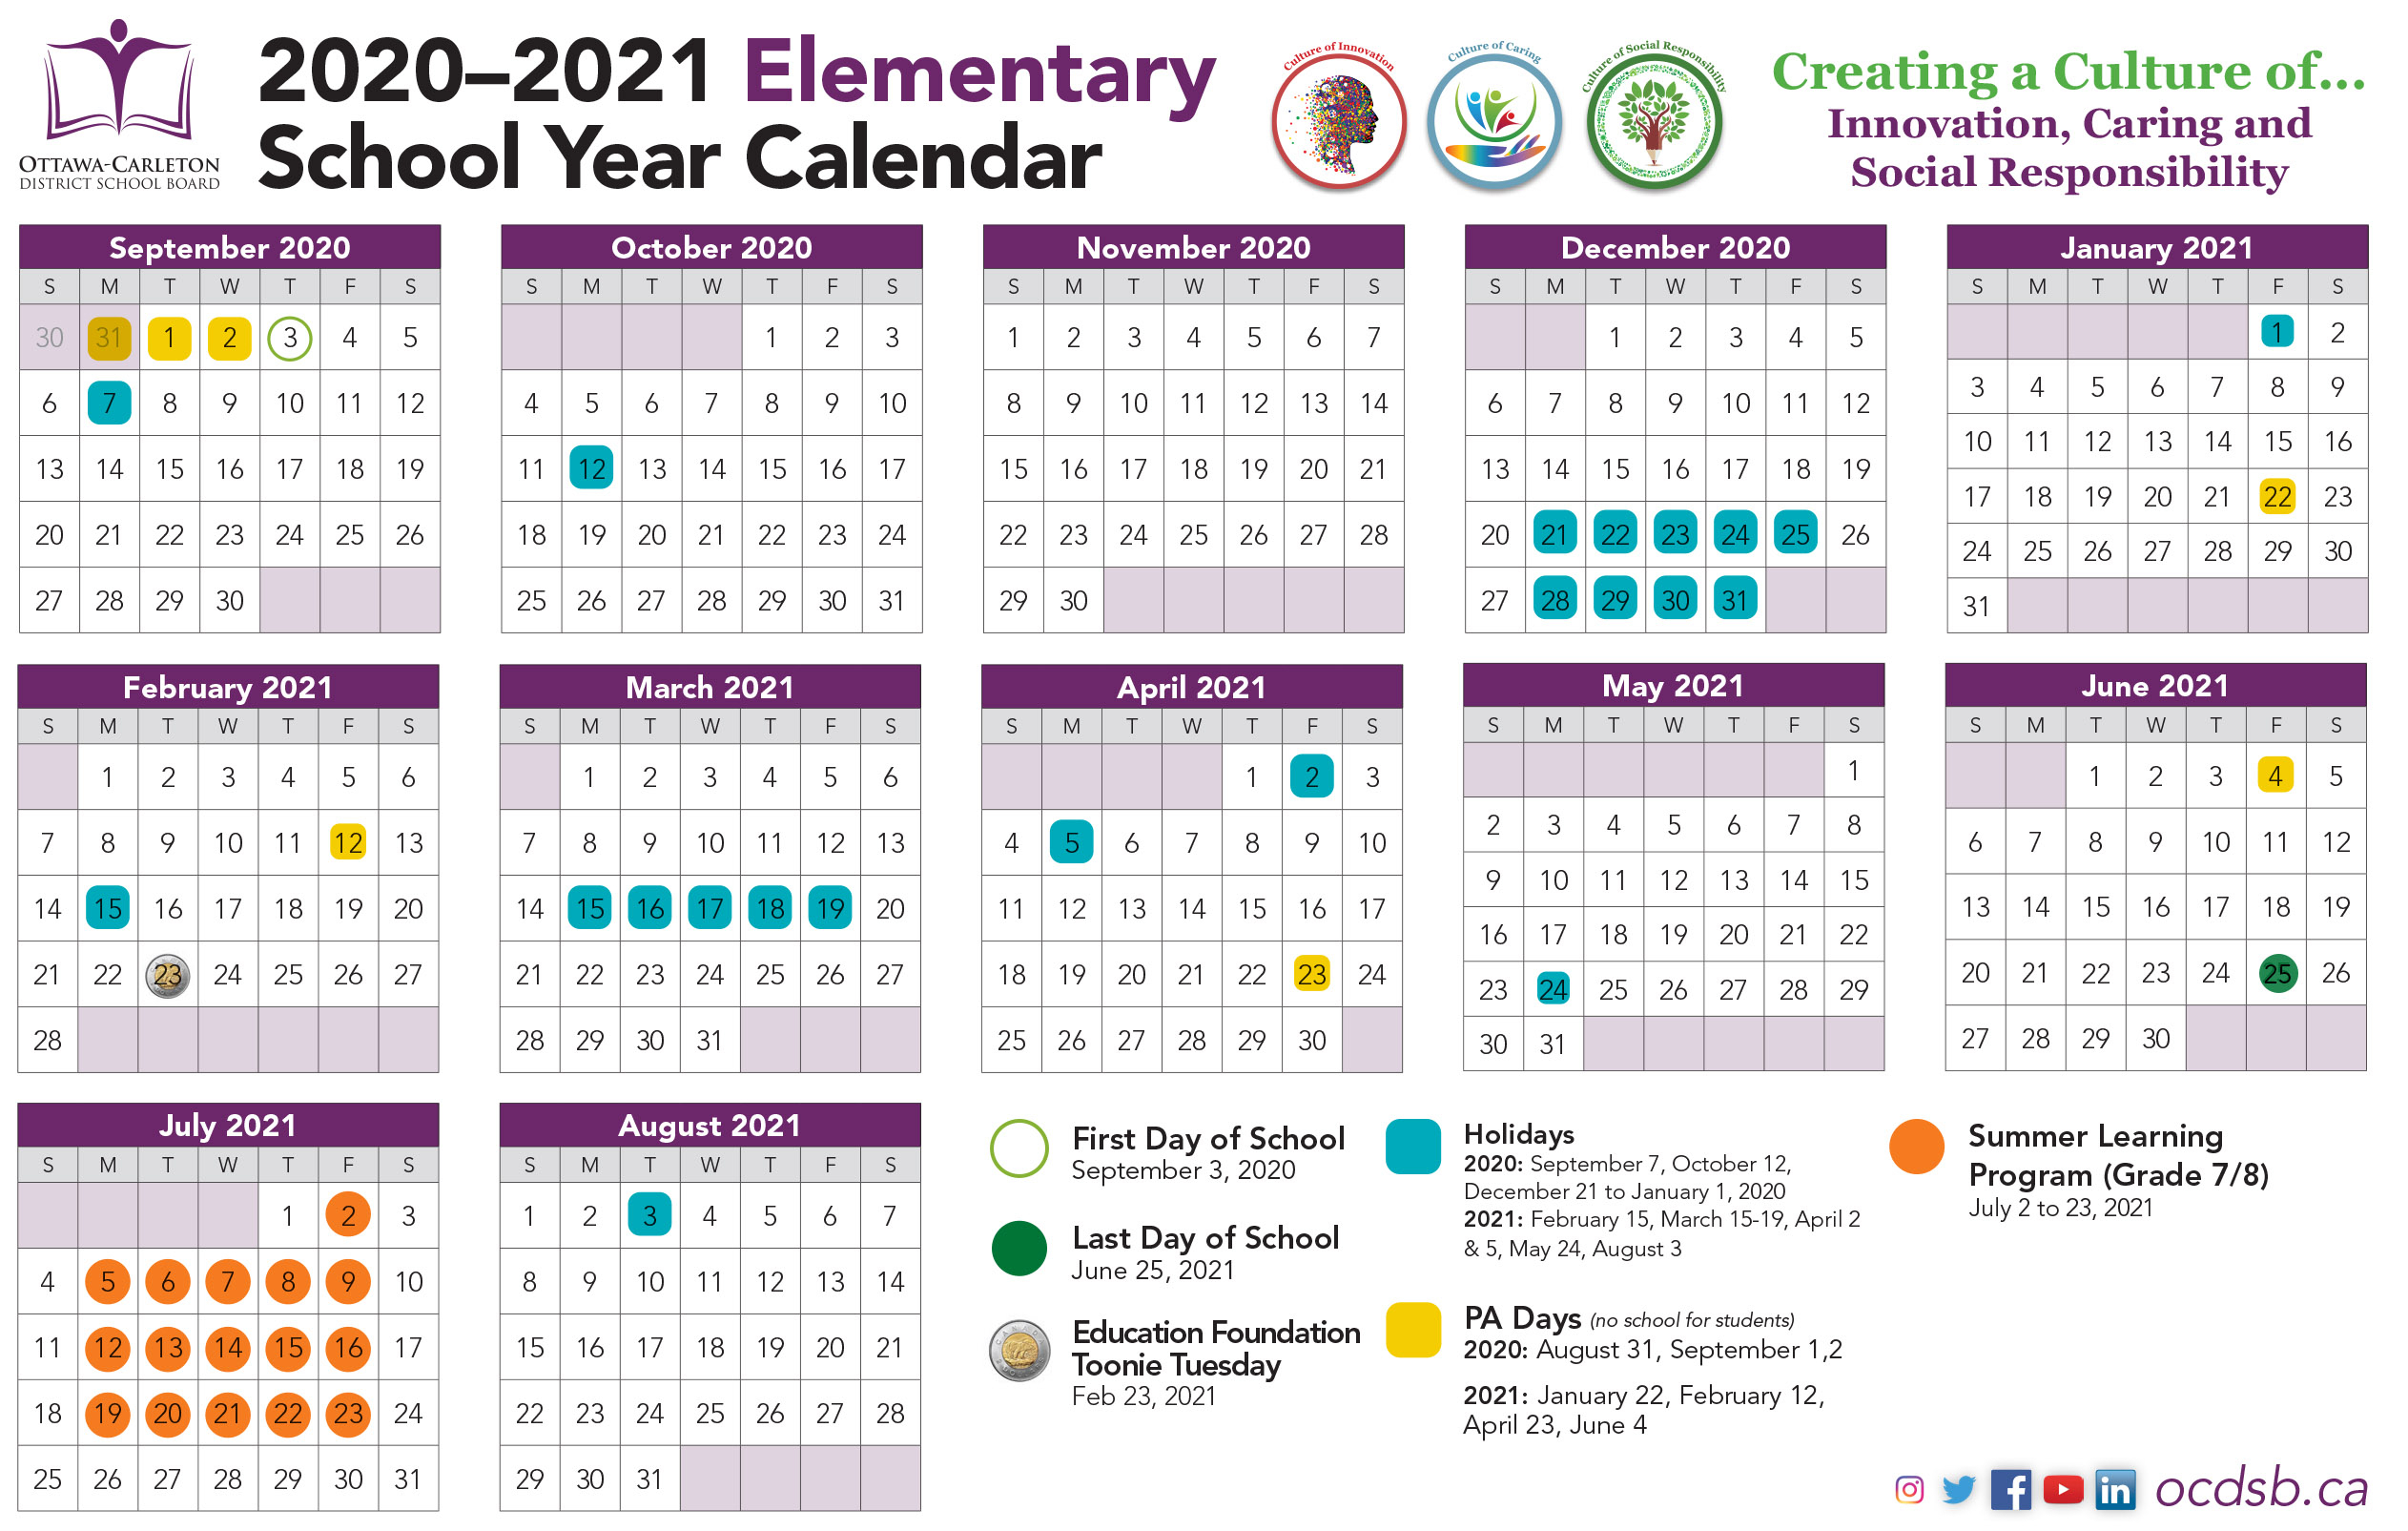 Public School Calendar 2021 | Printable Calendars 2021